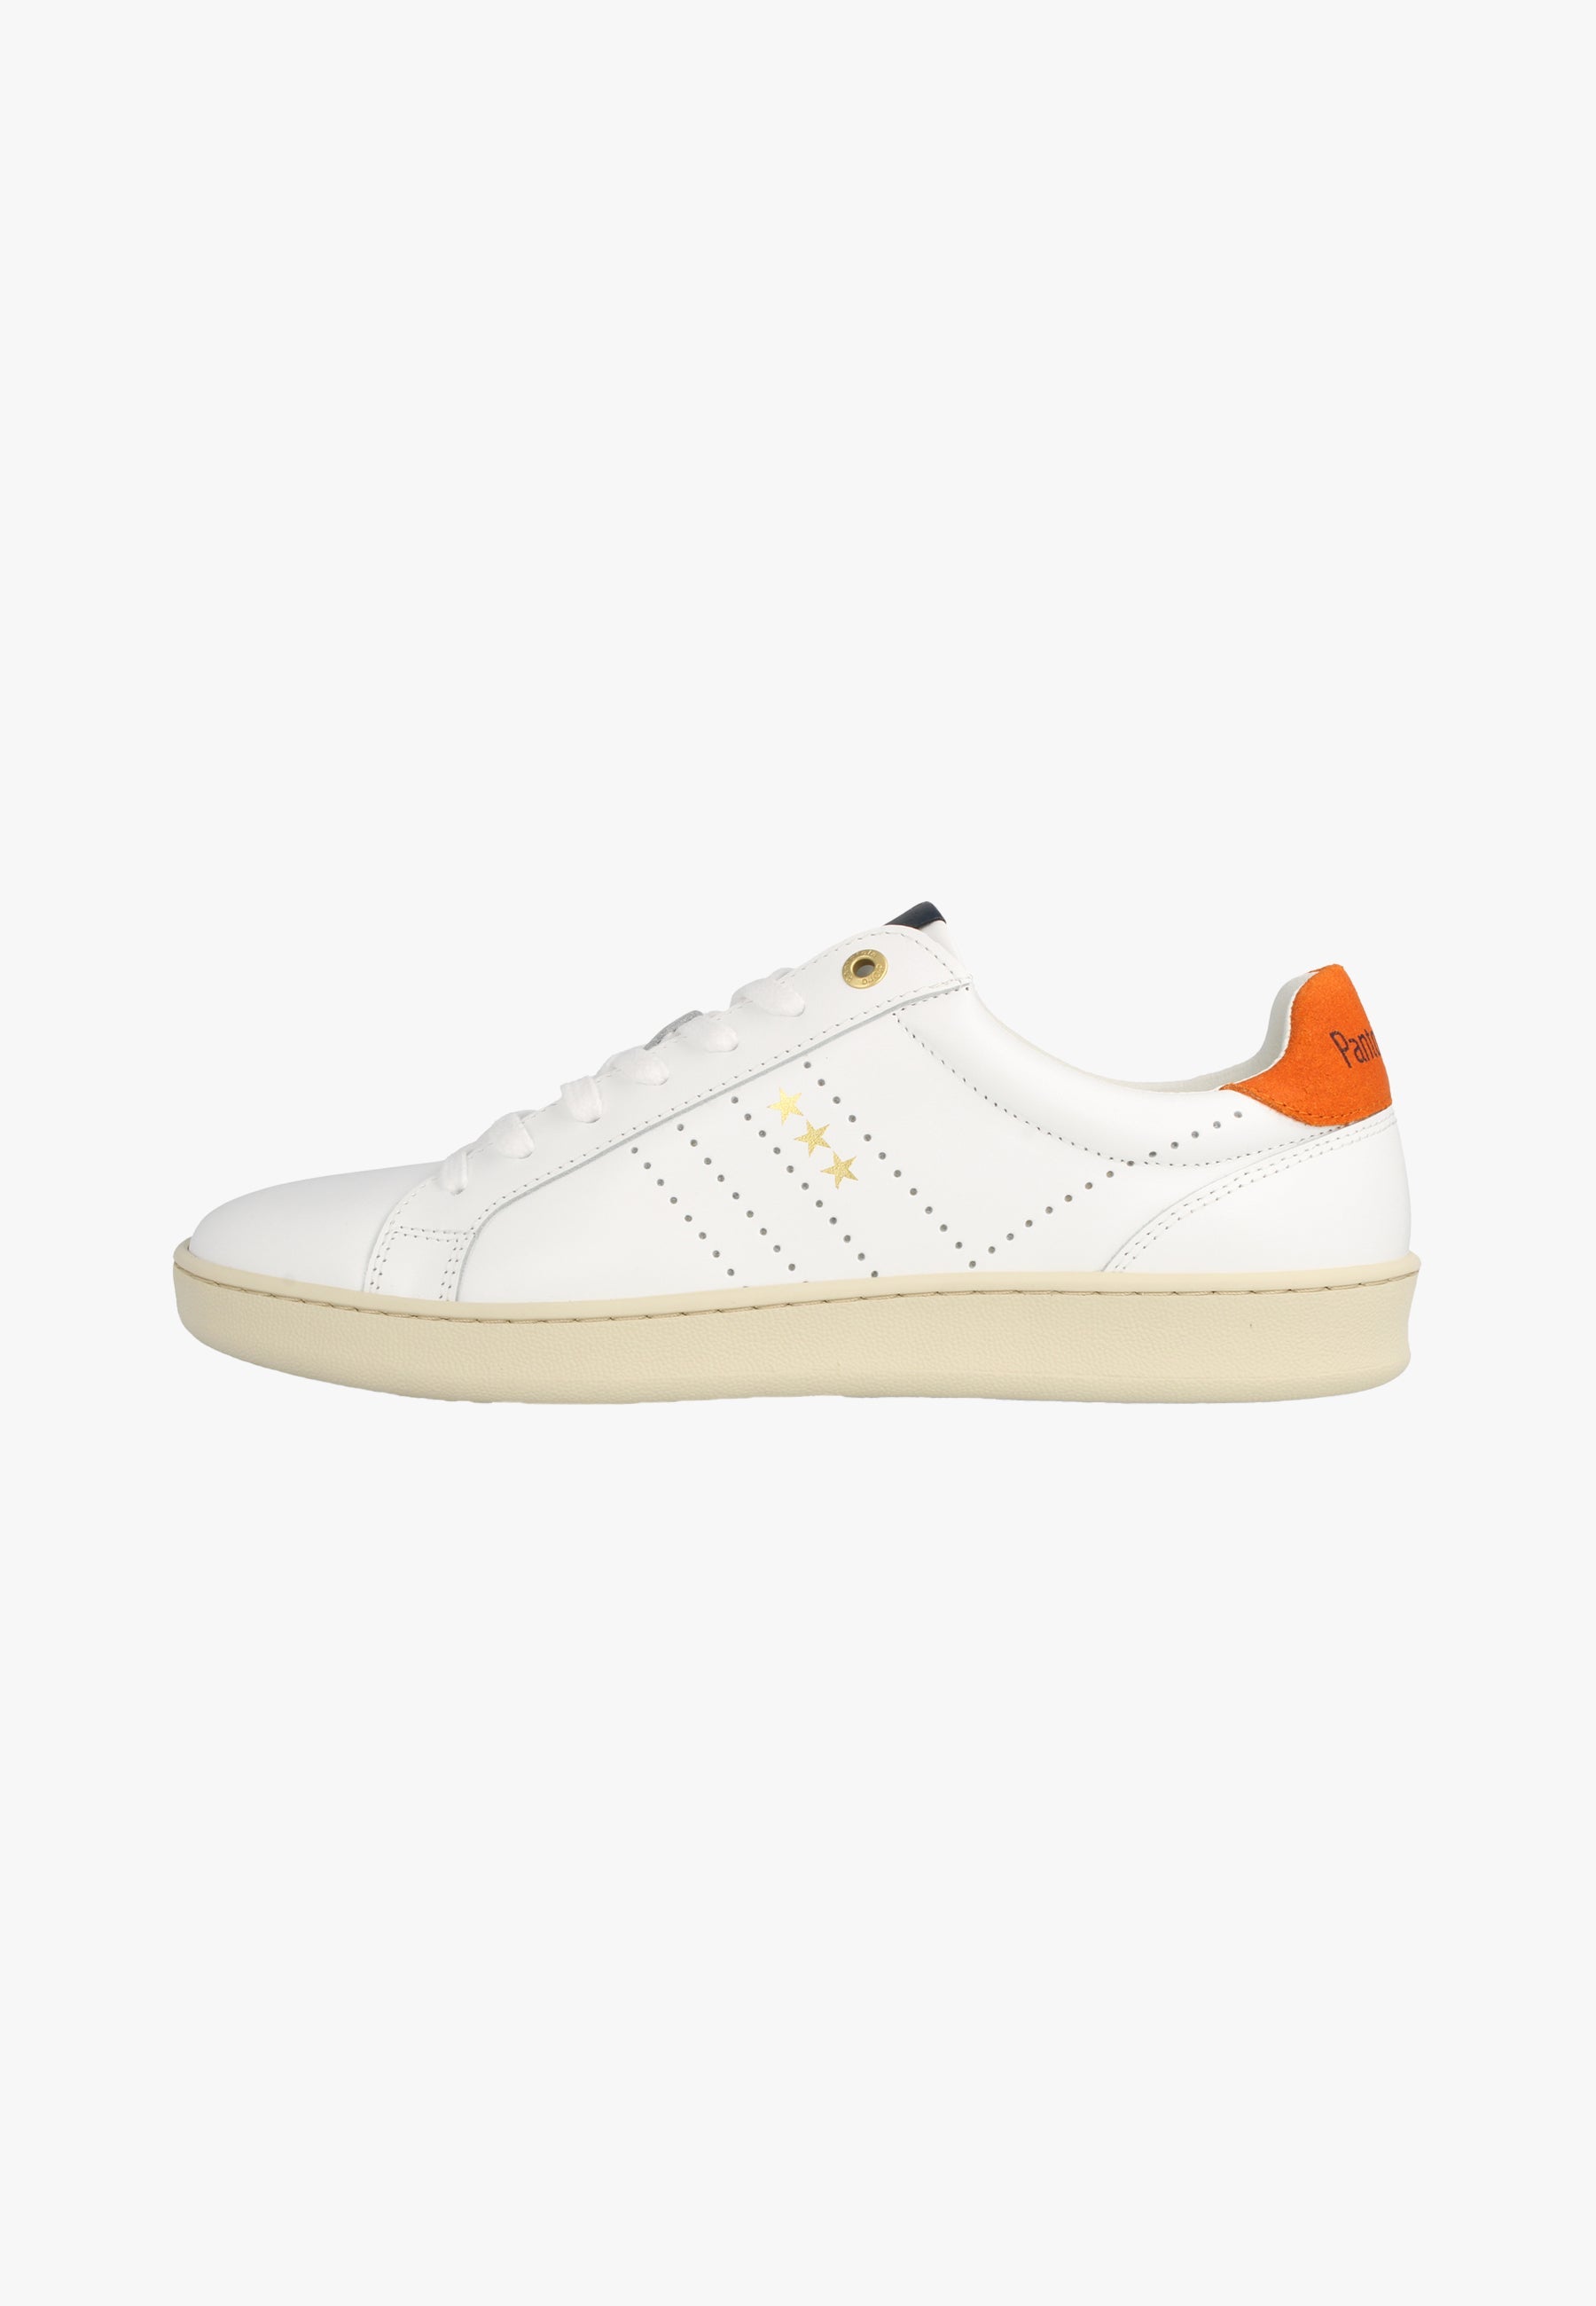 Arona 2.0 Low in Bright White/Orange Sneakers Pantofola d'Oro   